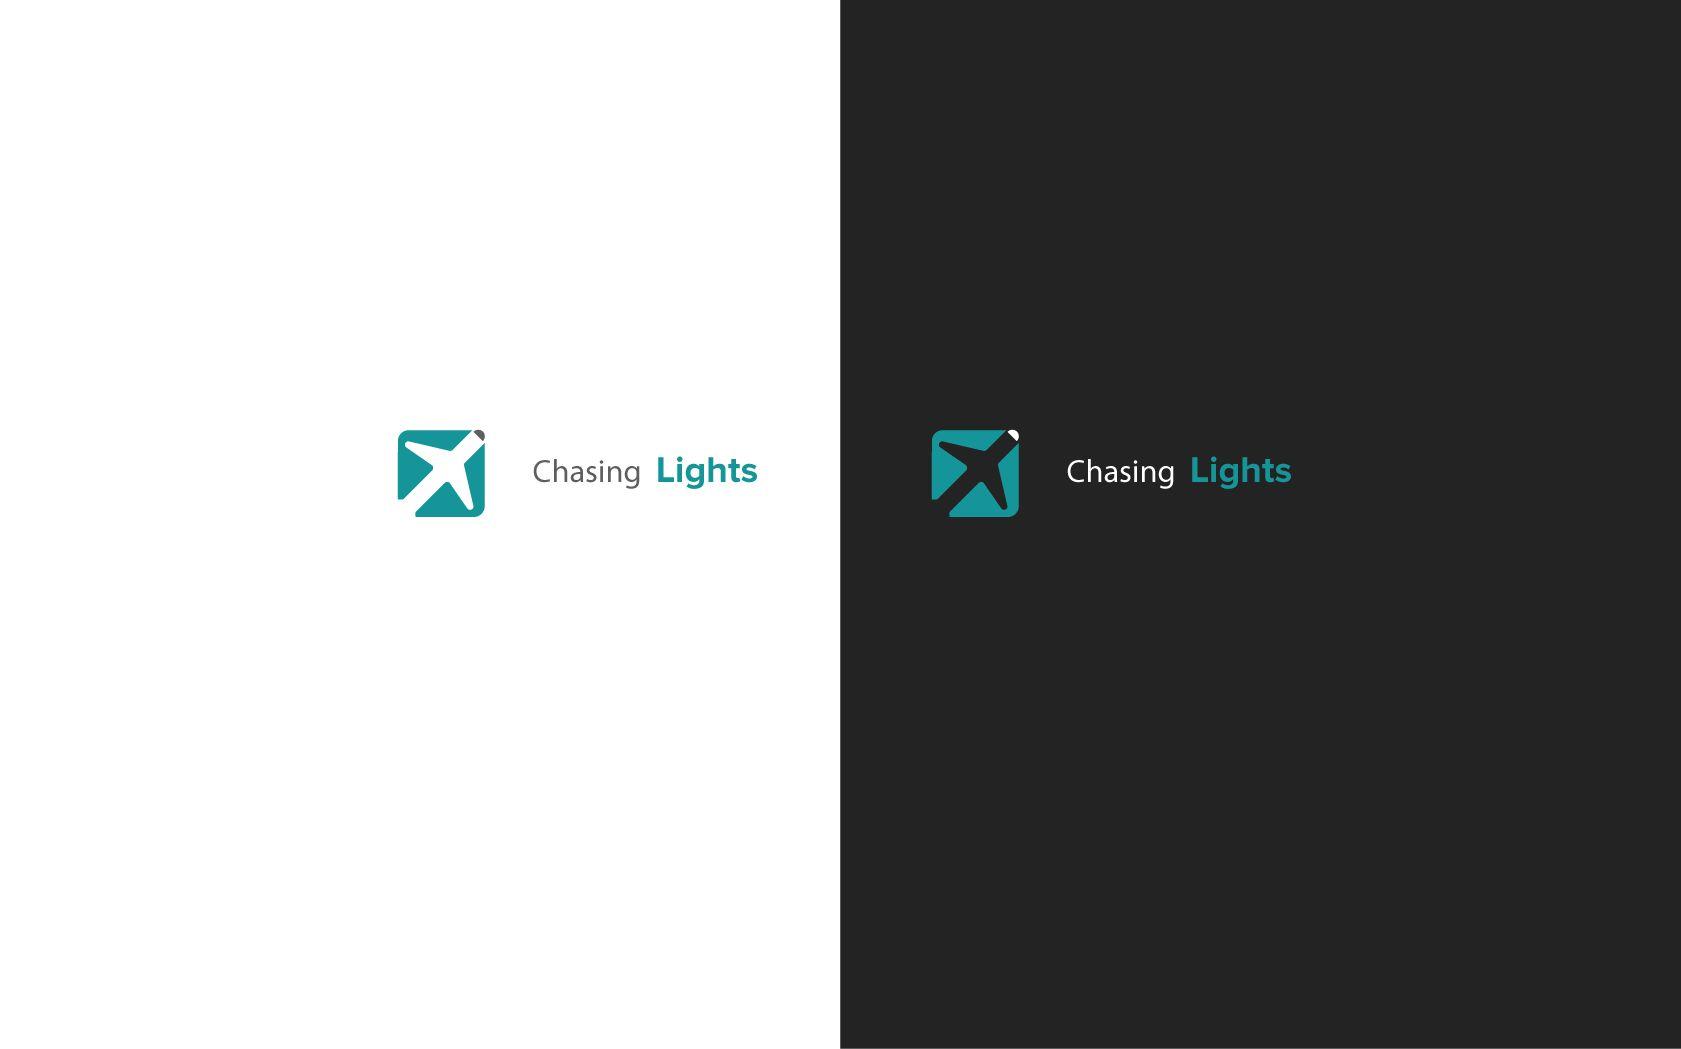 CTB Logo - Logo Chasing Lights For CTB | Logo's Design | Pinterest | Chasing lights